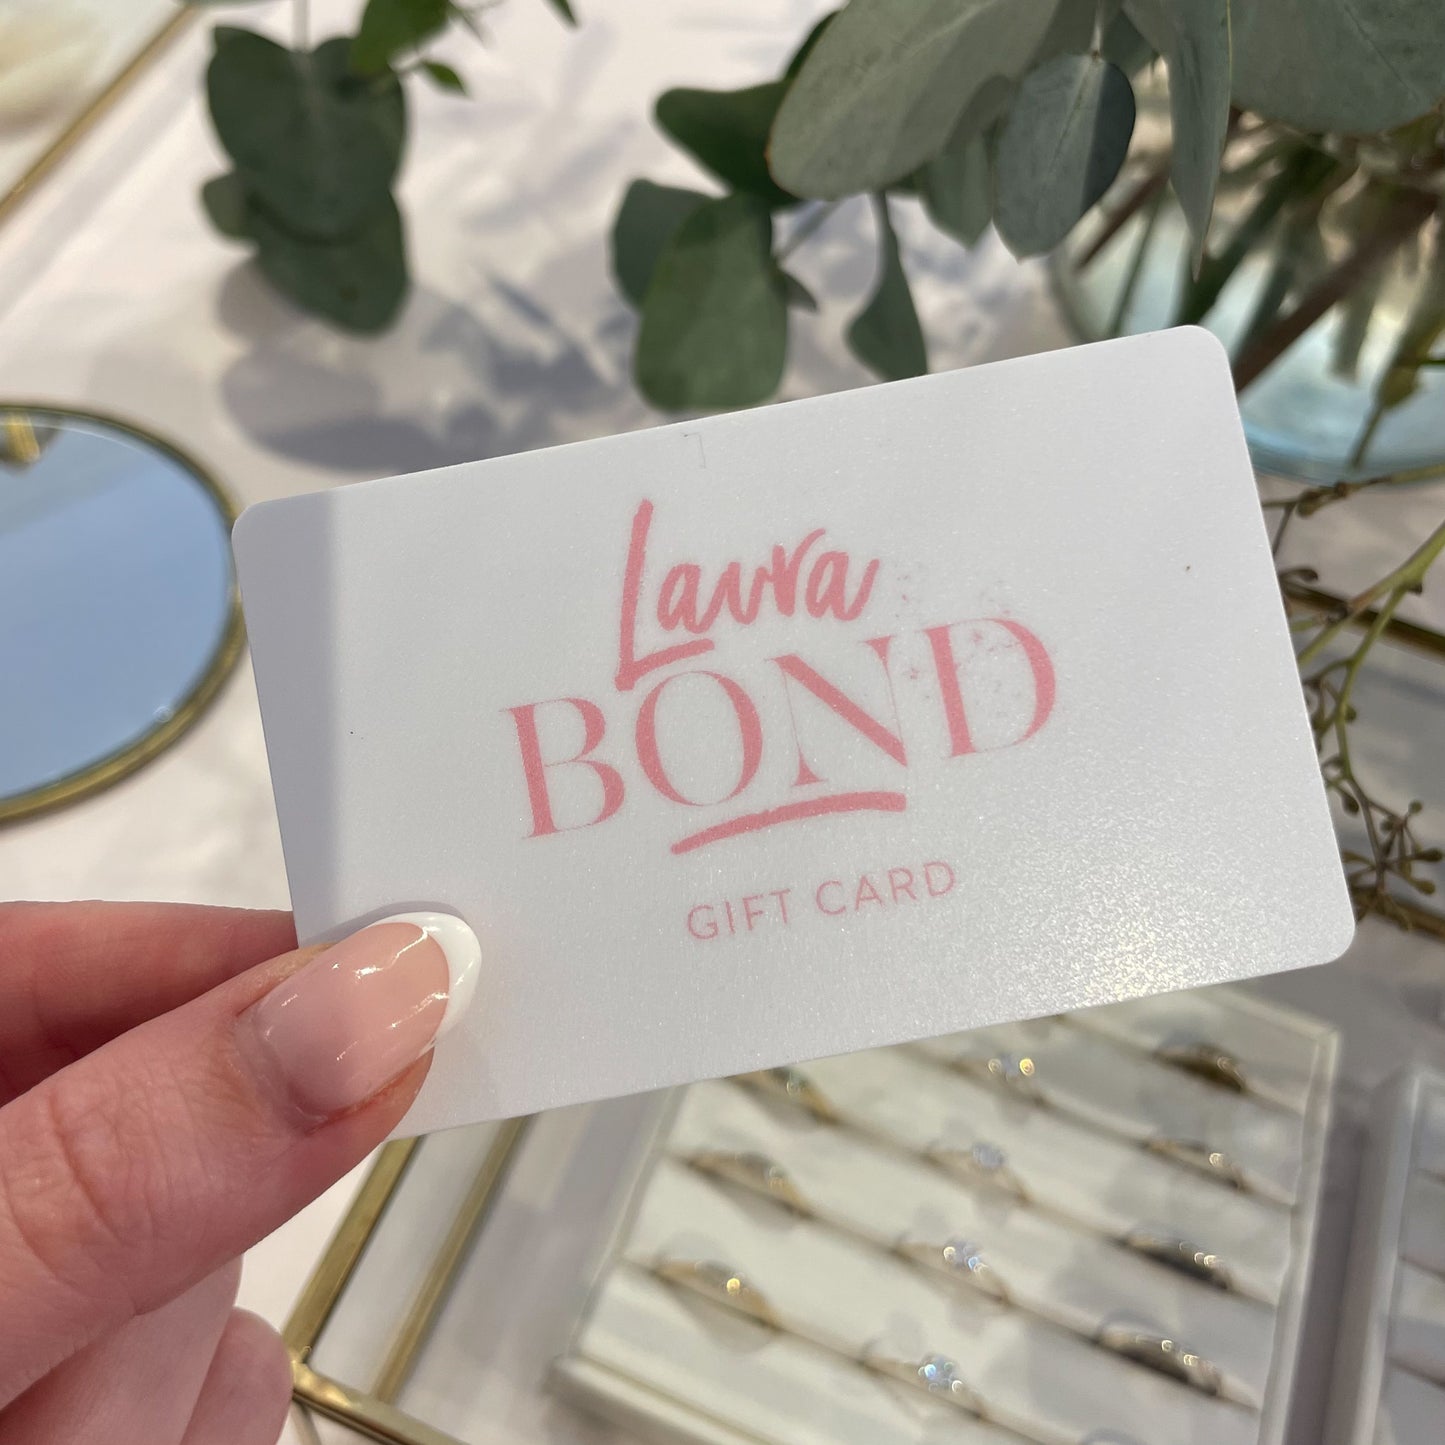 Laura Bond gift card